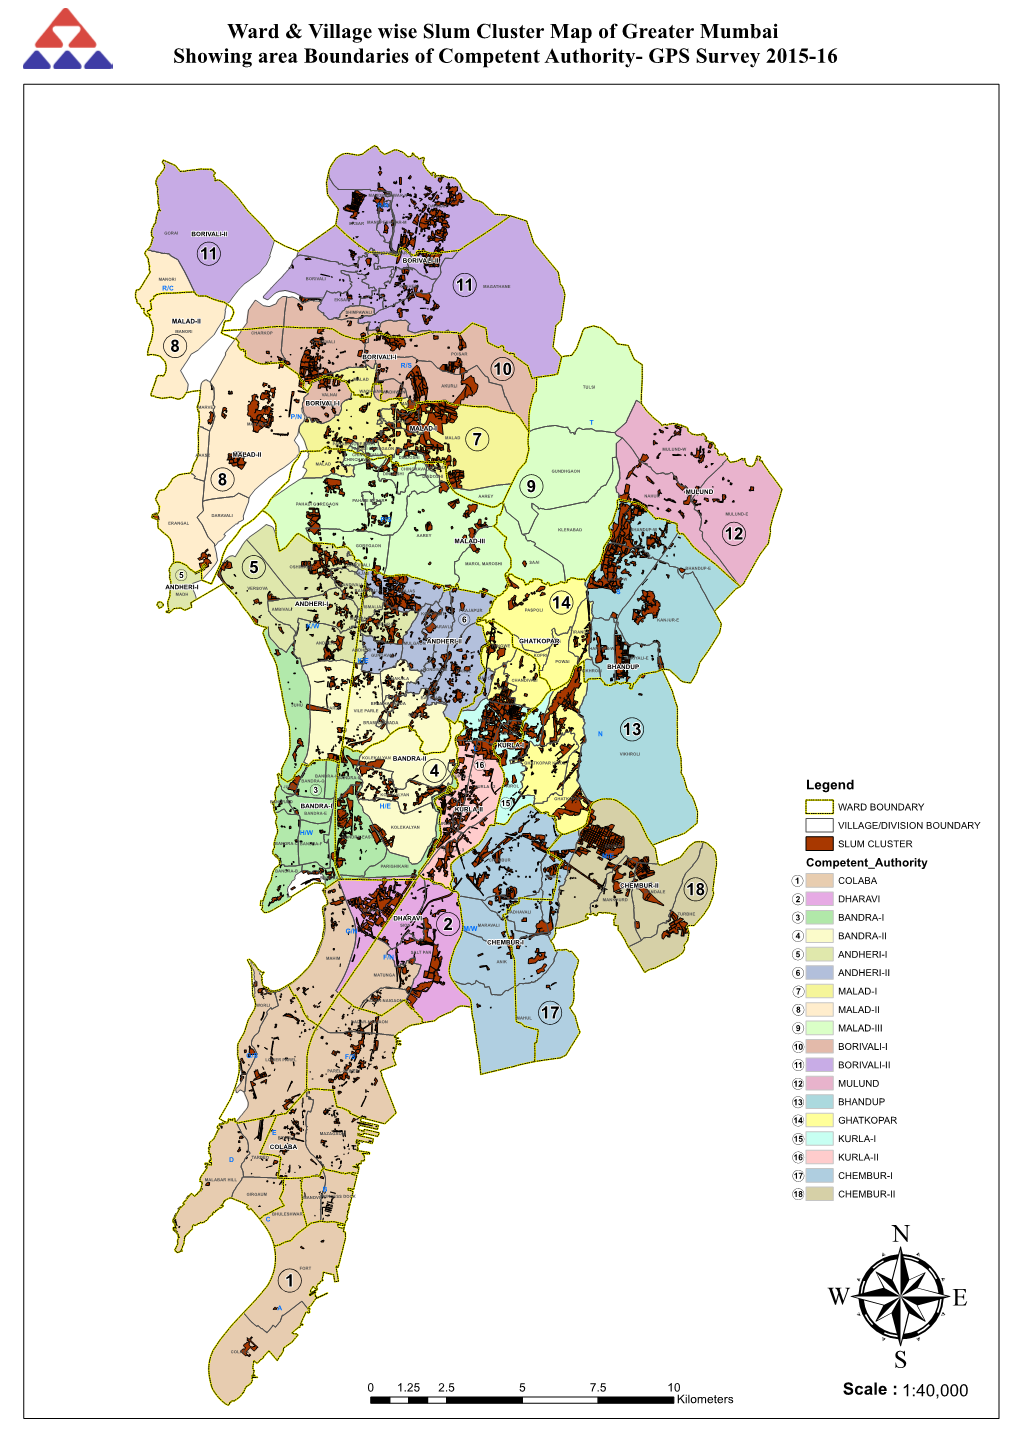 Slum Cluster Map Showing Boundaries of Competent